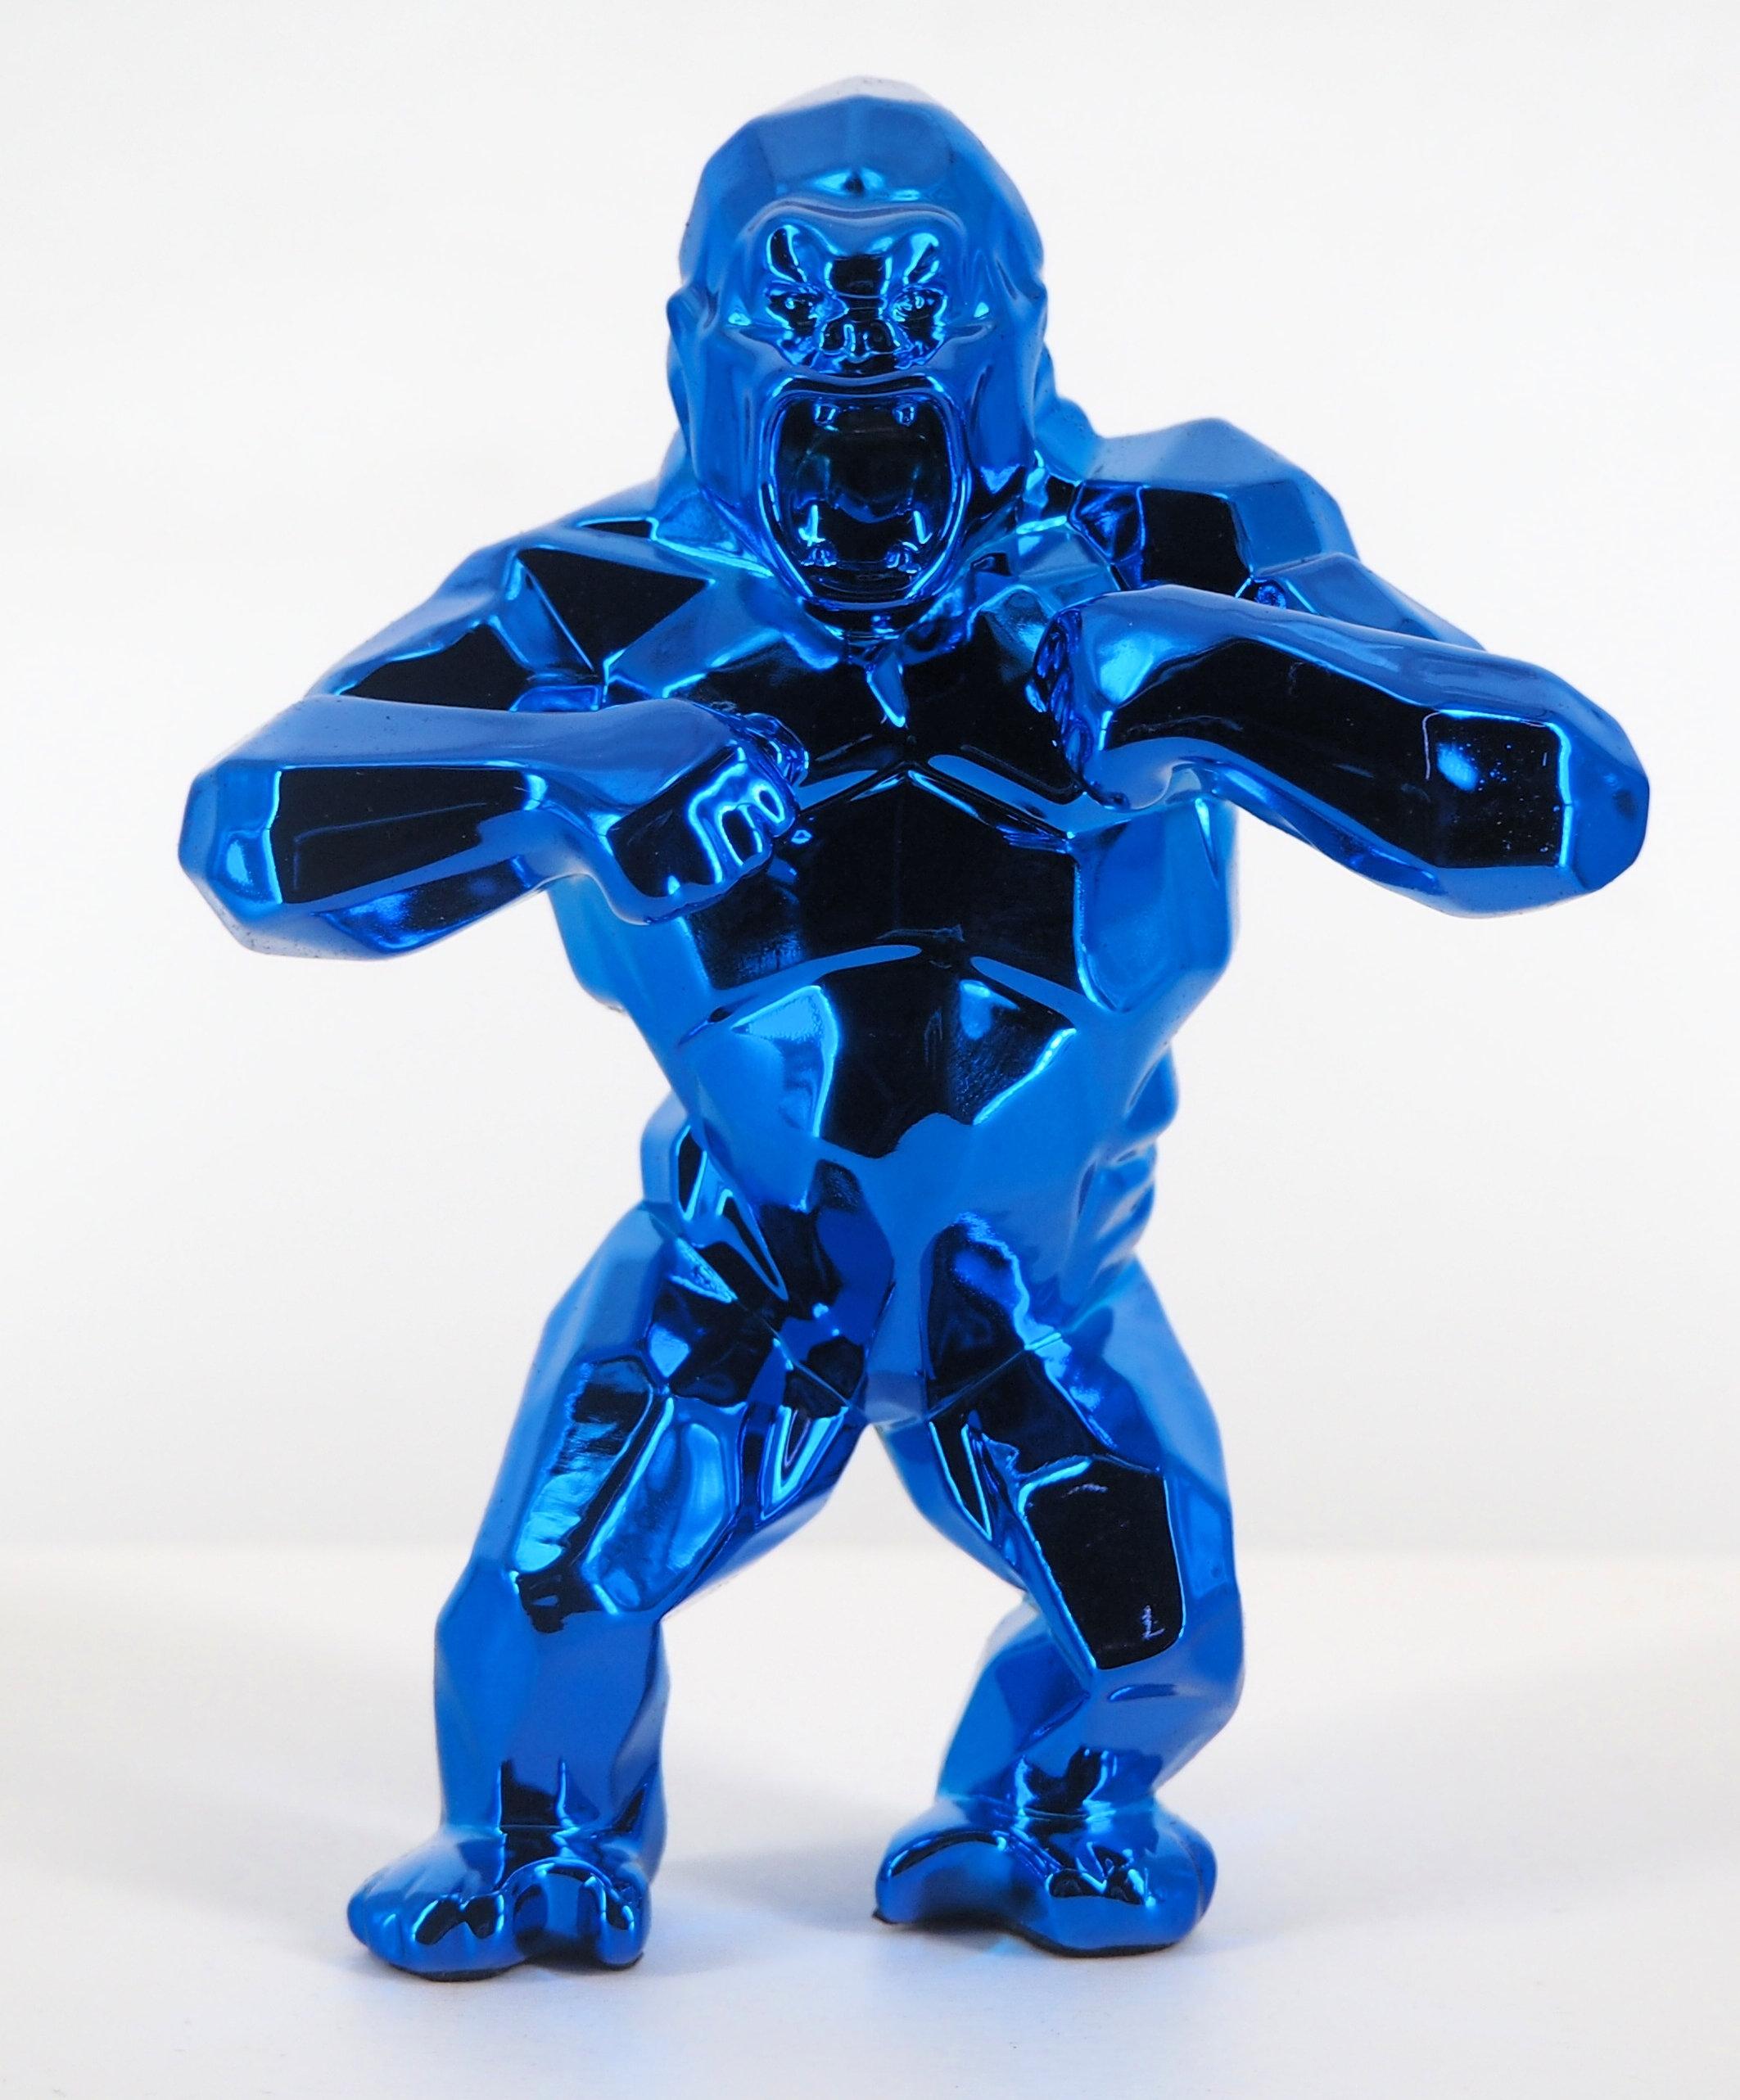 Richard Orlinski Figurative Sculpture - Kong Spirit (Blue edition) - Sculpture in original box with artist certificate